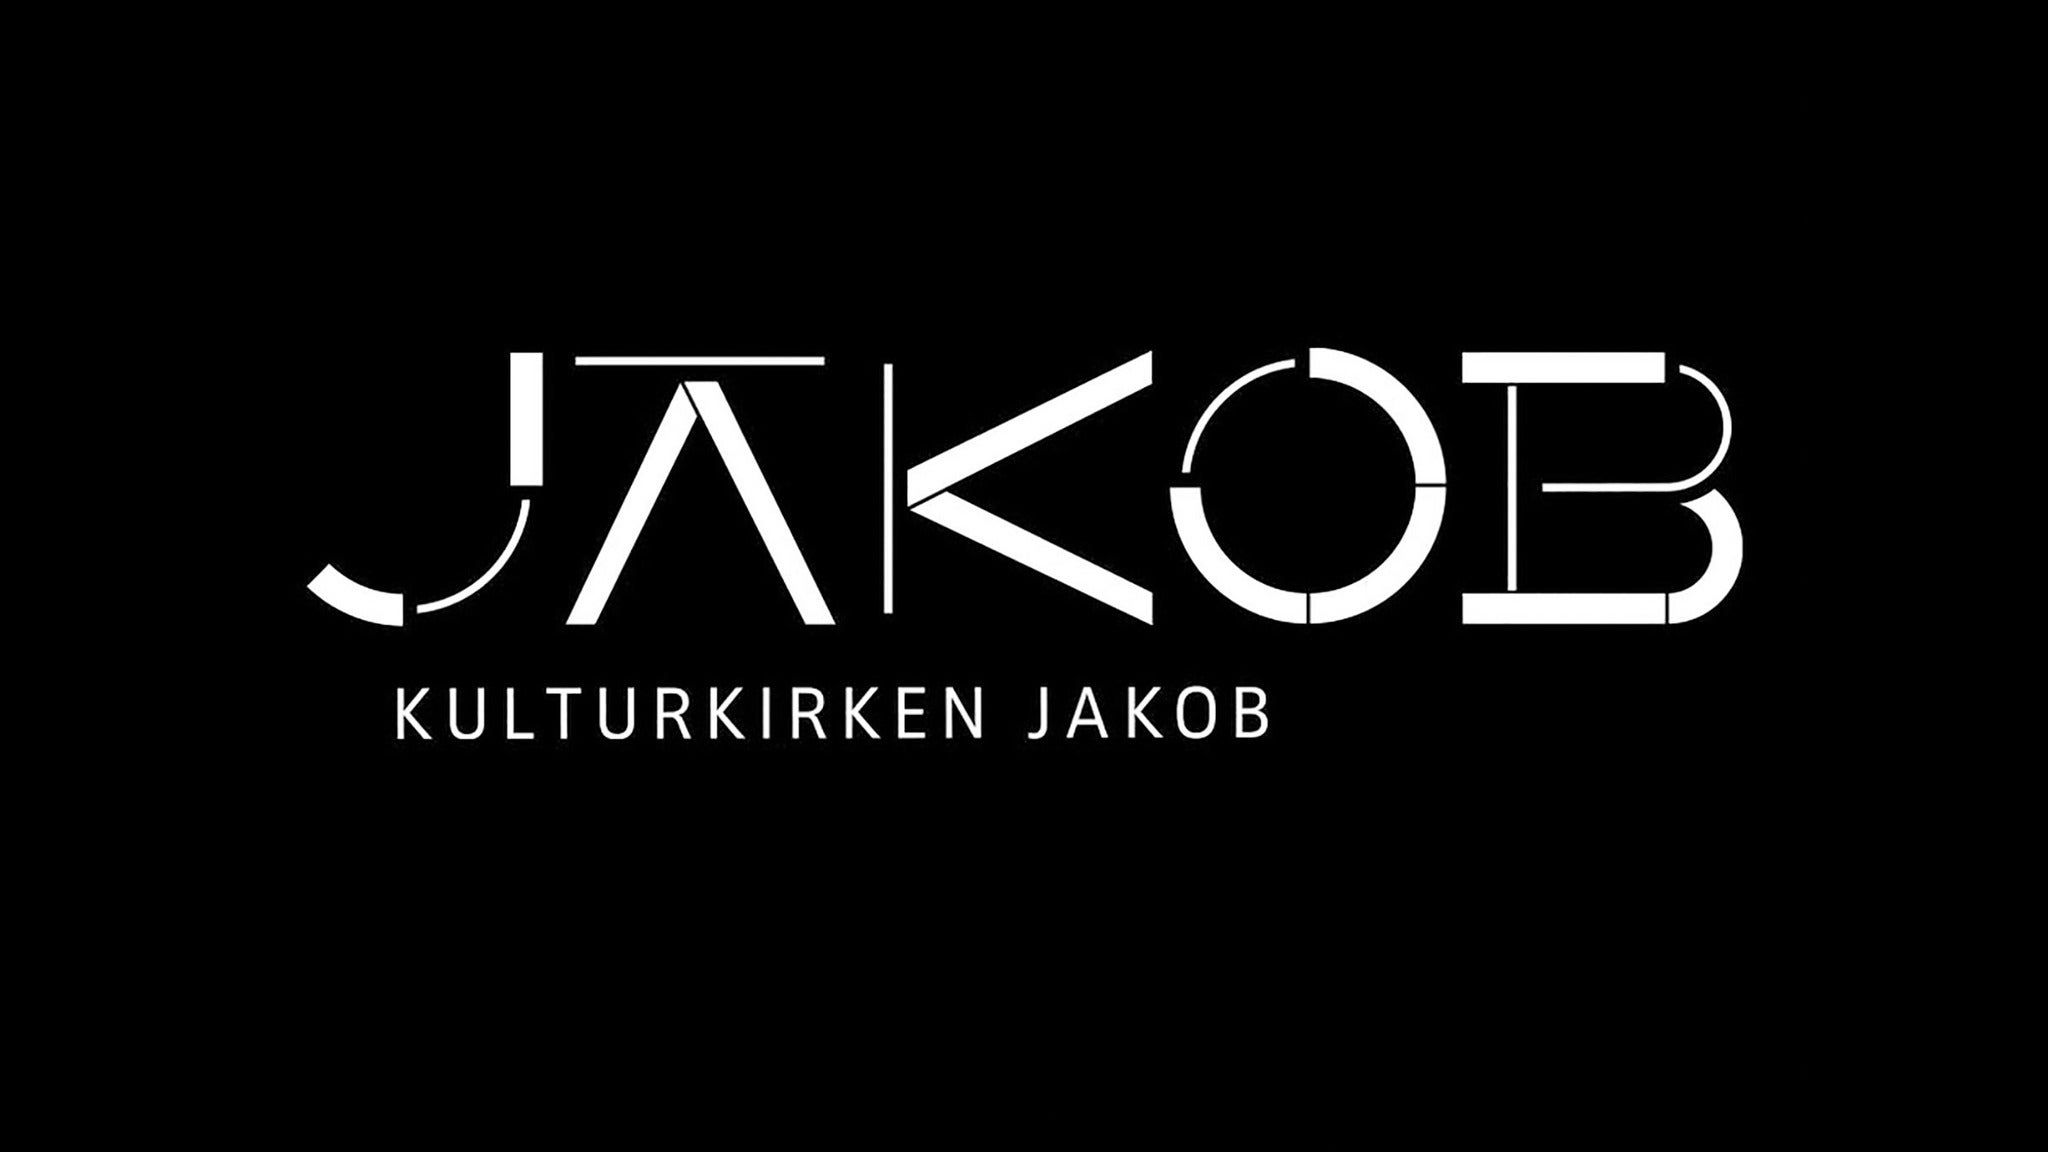 Kulturkirken Jakob presale information on freepresalepasswords.com